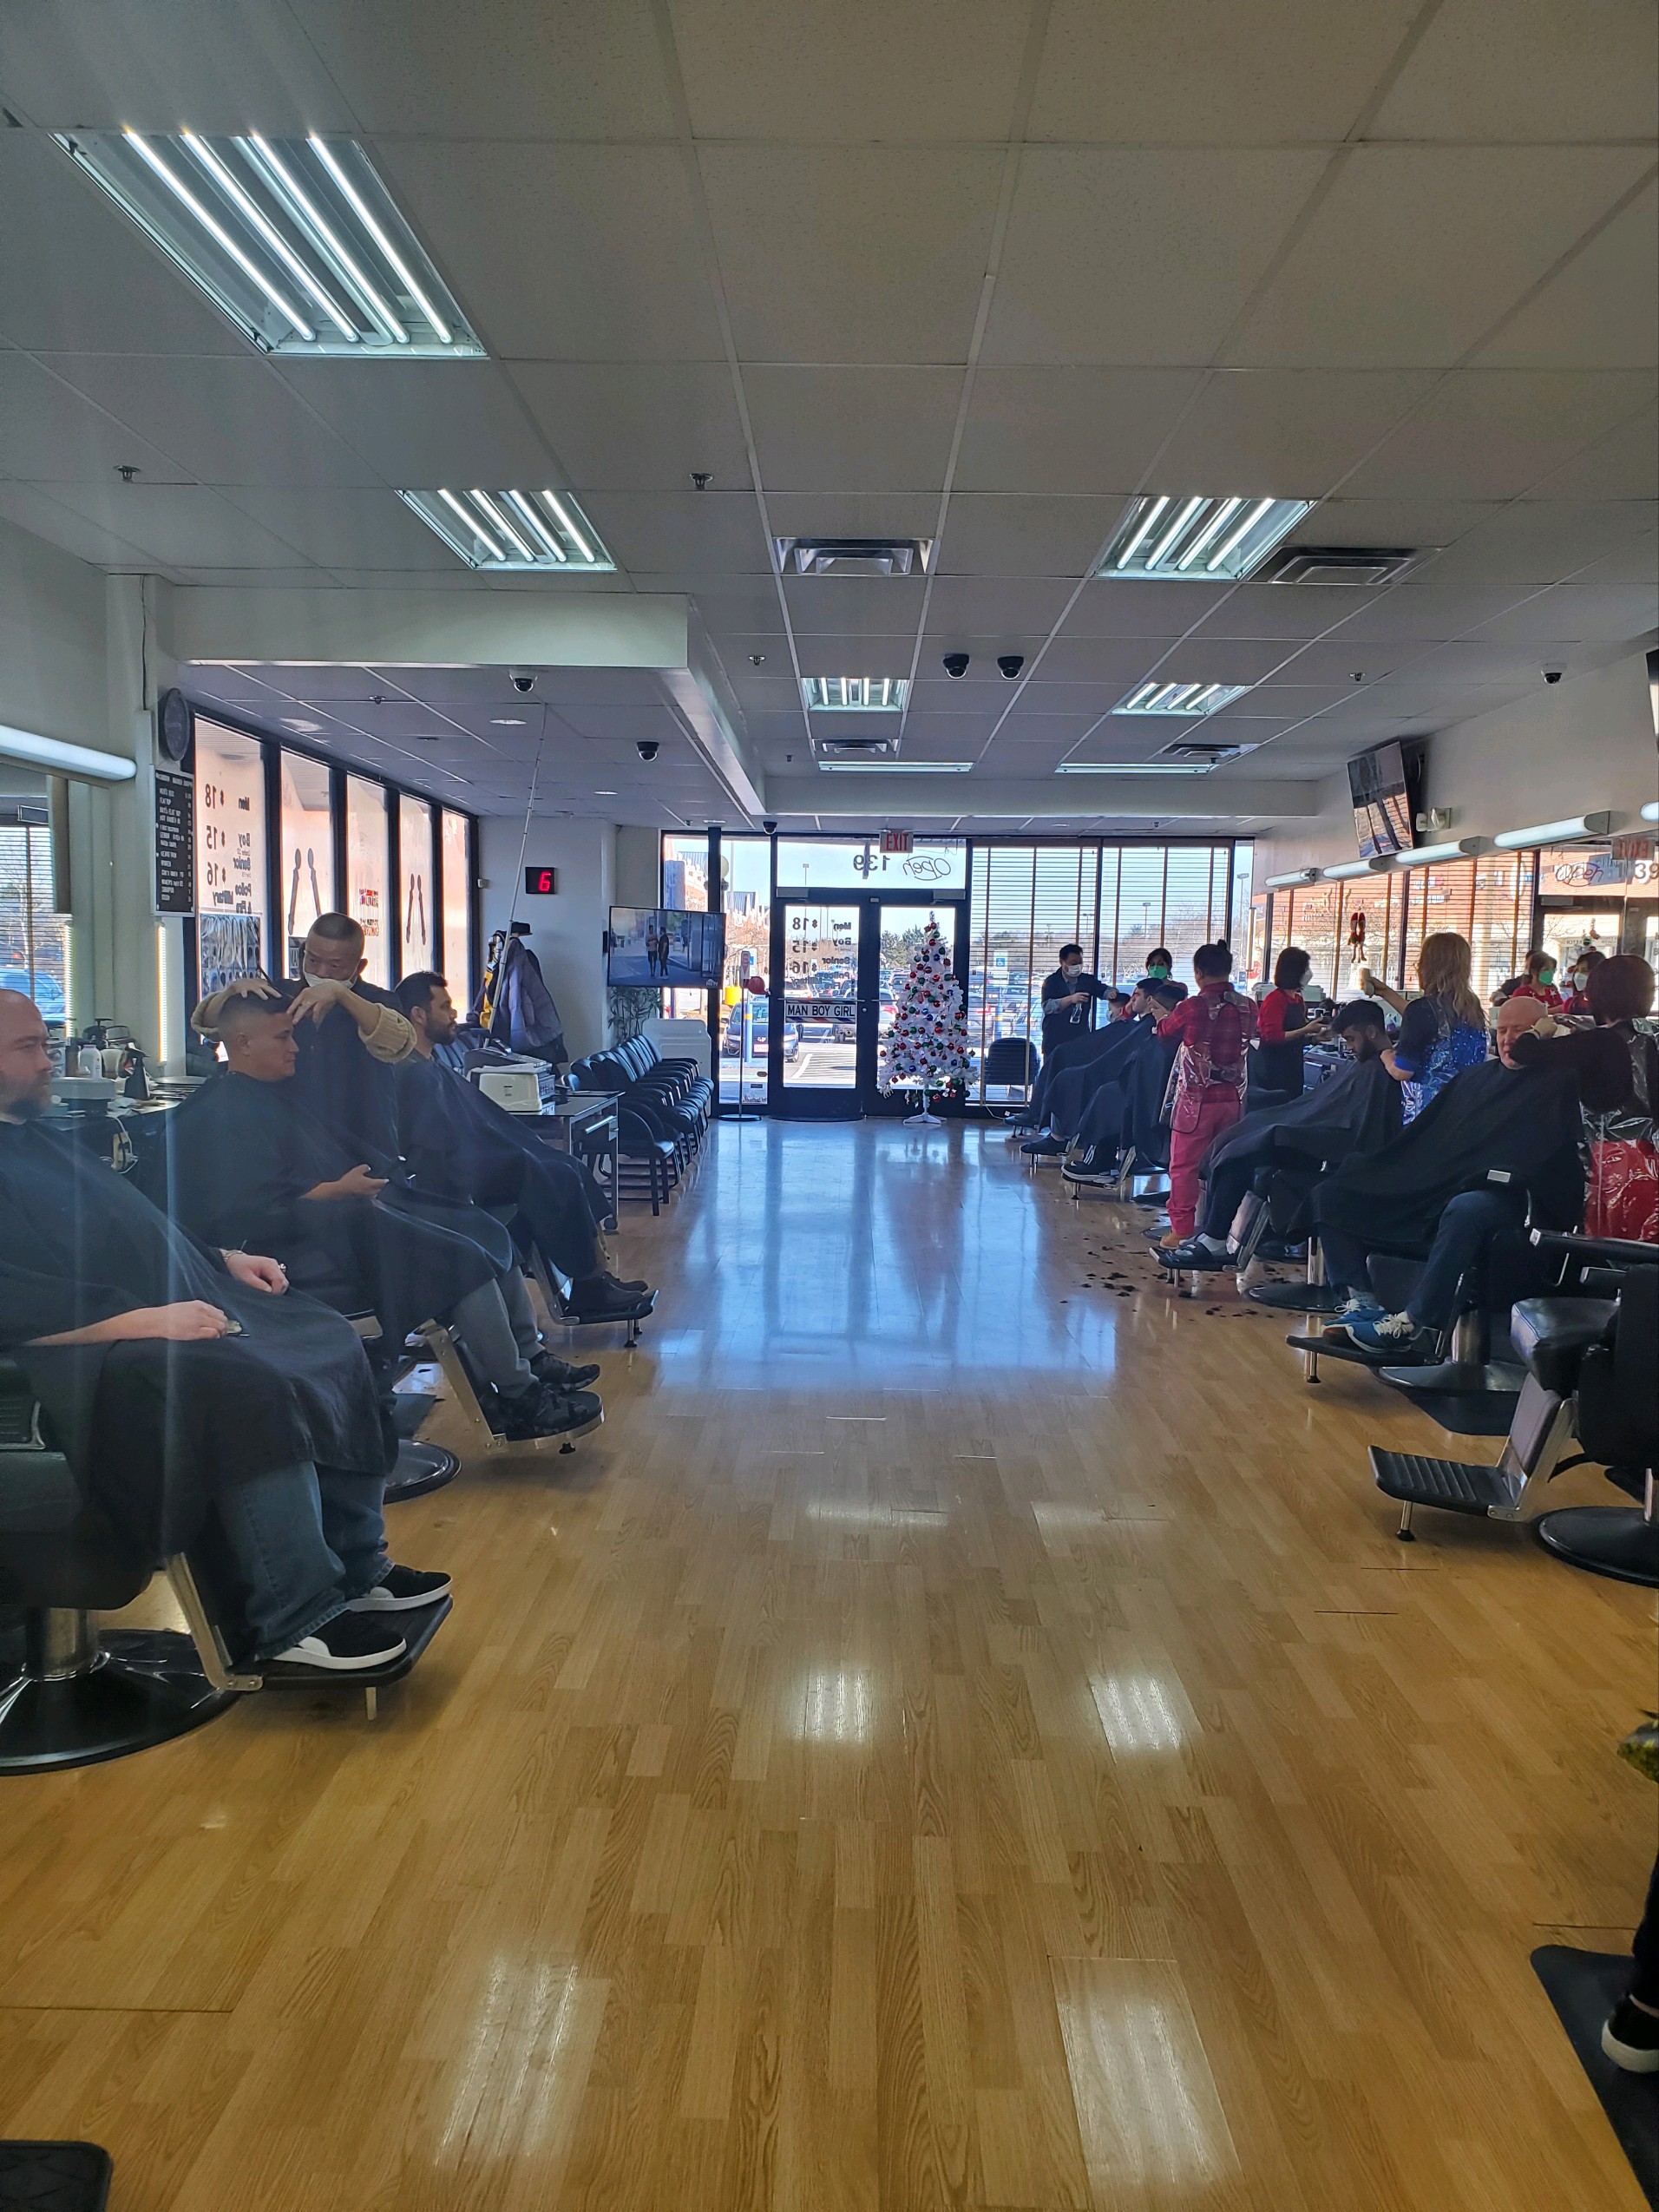 Inside the Barbershop